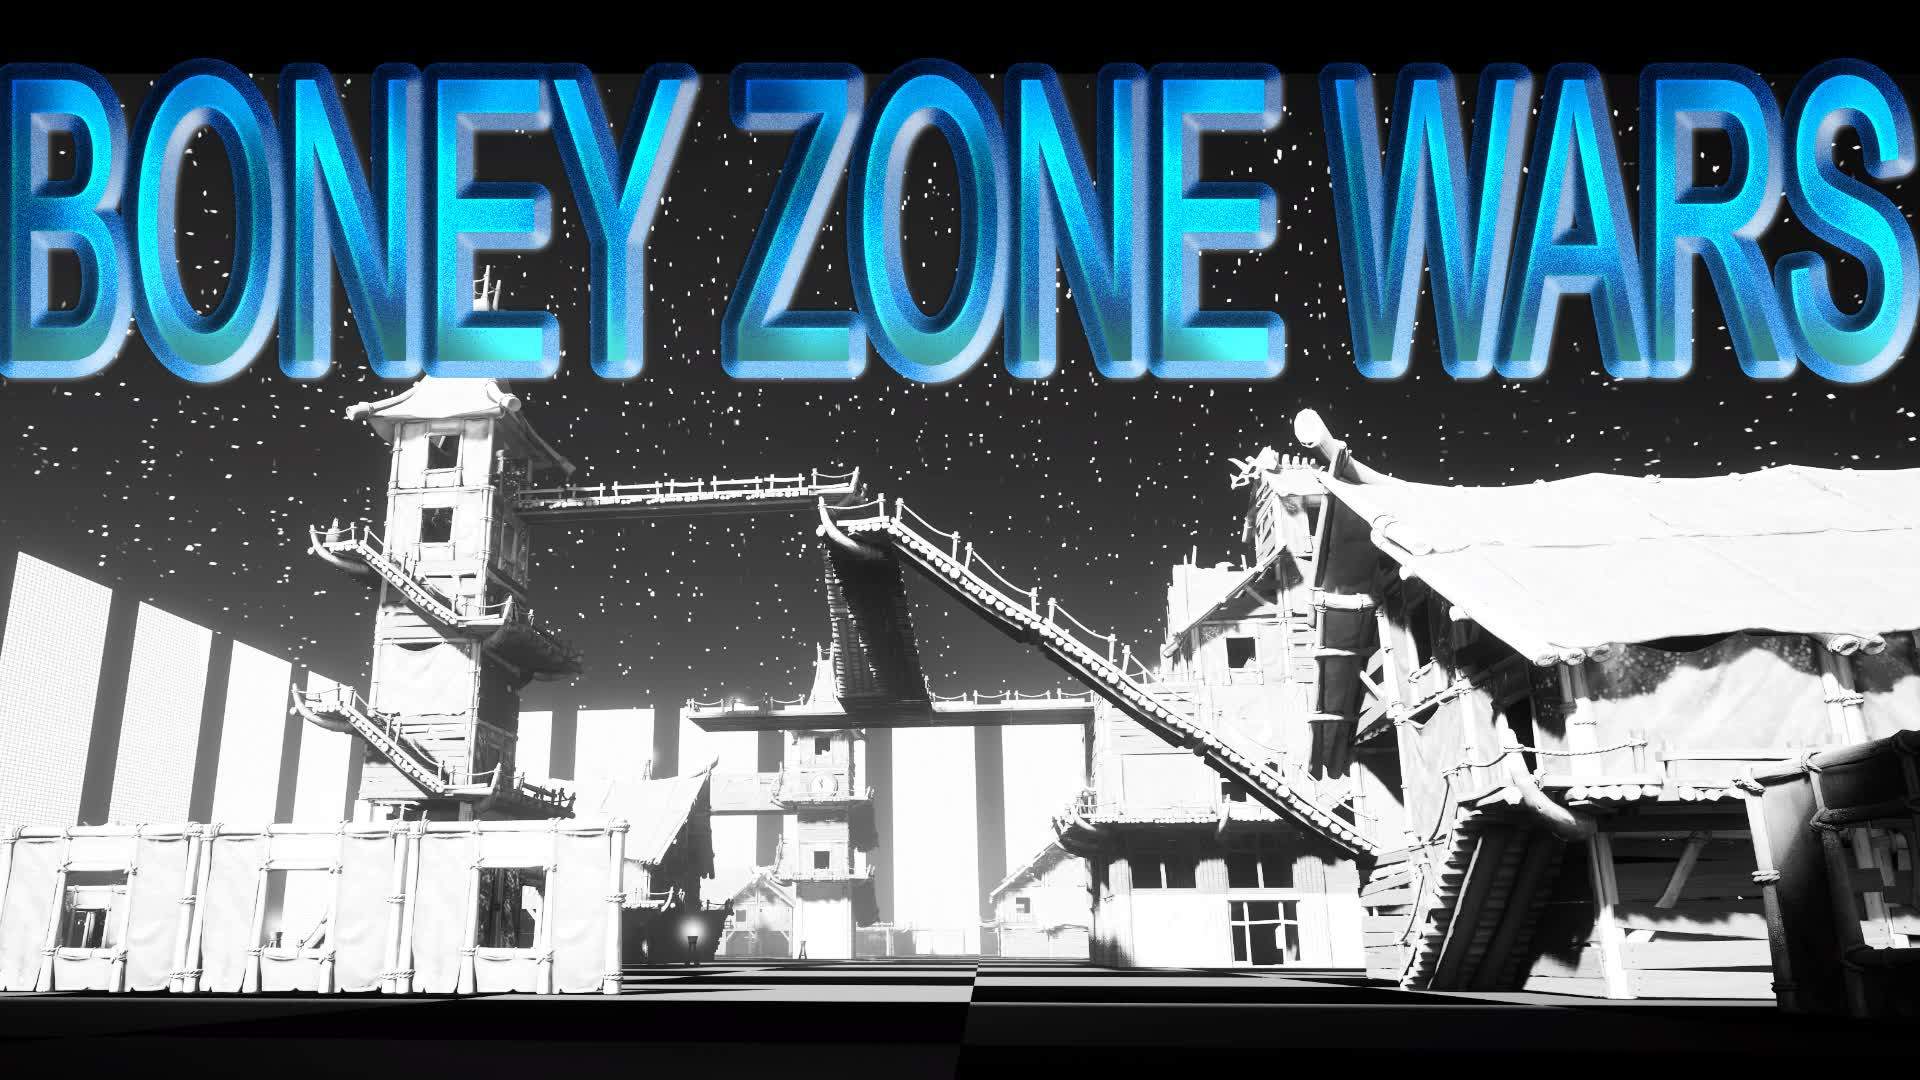 Boney Zone Wars